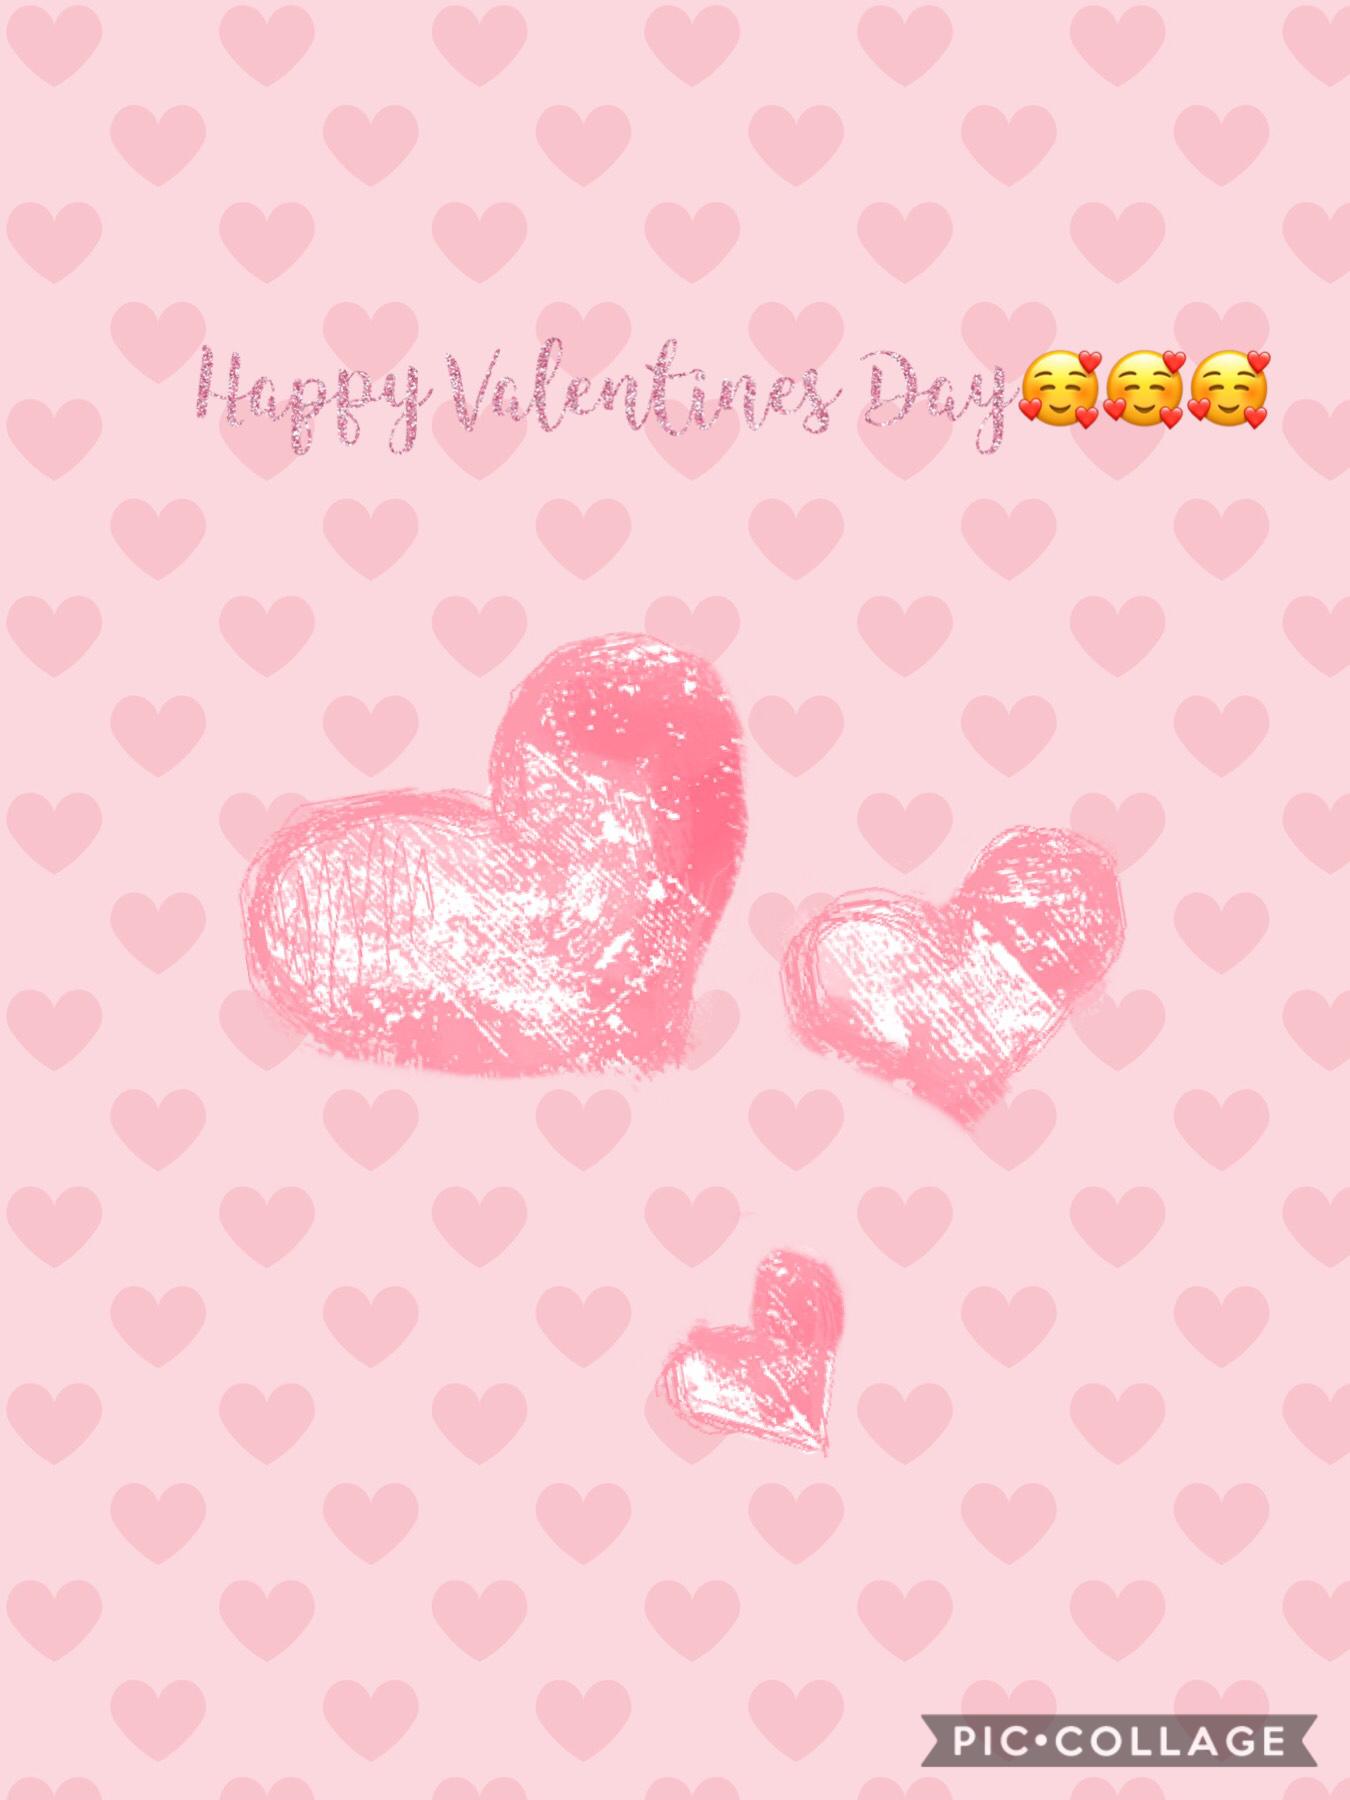 Happy Valentines Day!!!!!!!!!!!!!🥰🥰🥰🥰🥰🥳🥳🥳🥳🥳🥳😍😍😍😍😍😀😀😀😀😀😀☺️☺️☺️☺️☺️☺️